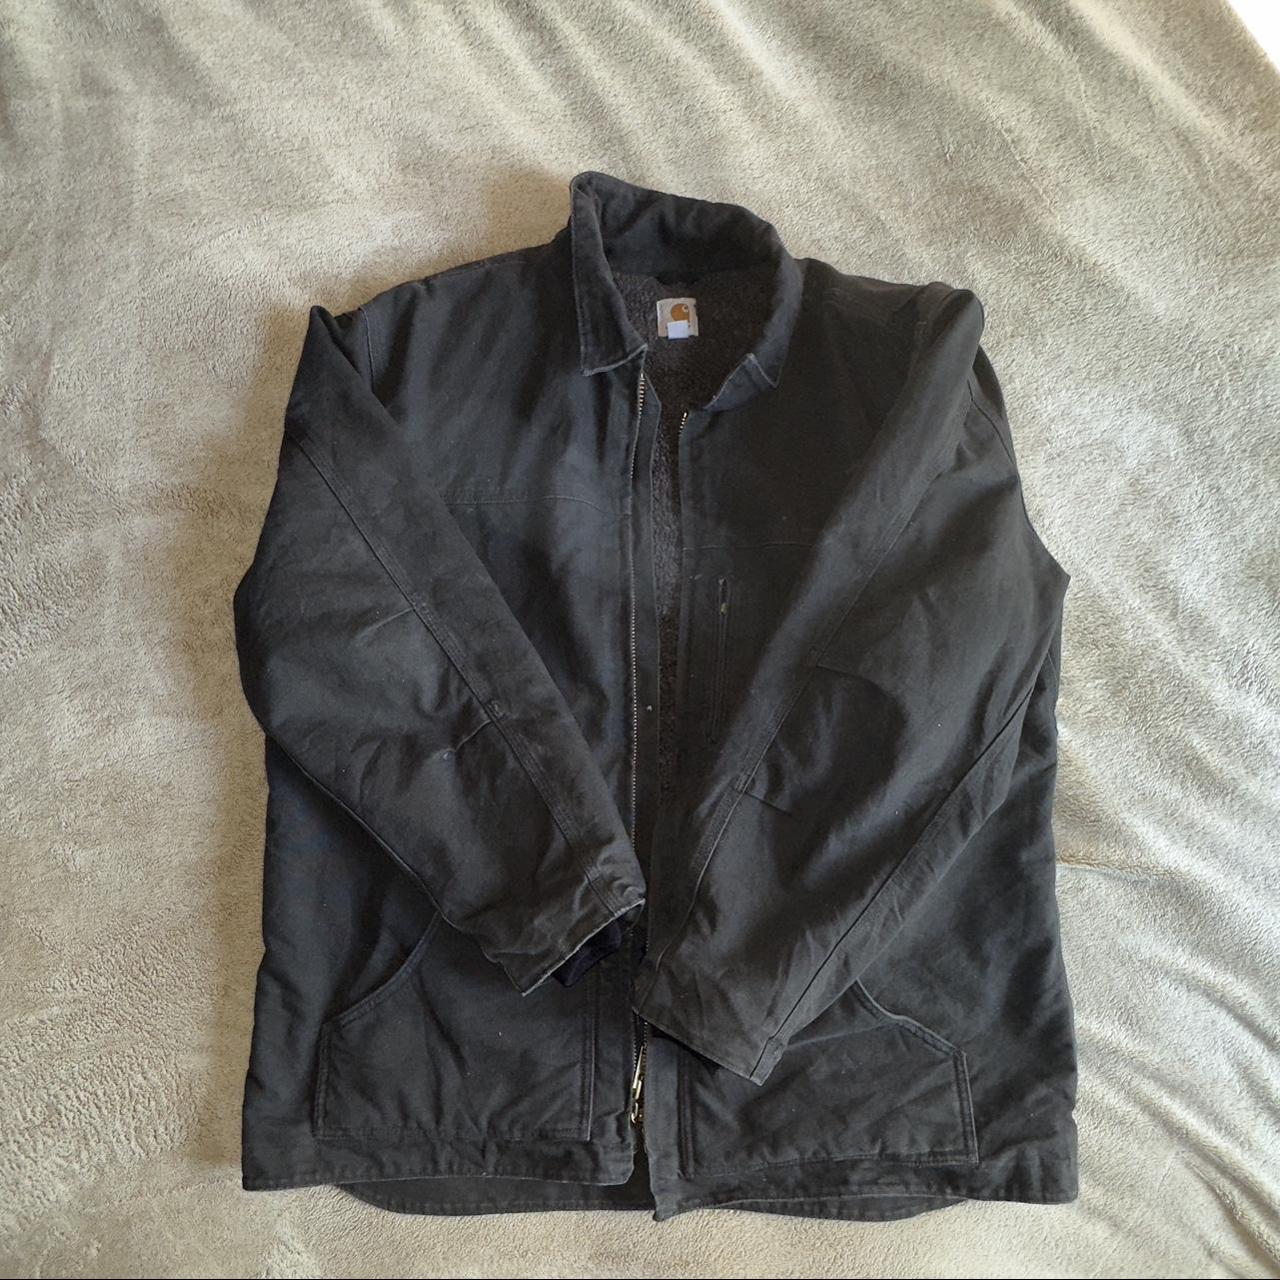 Vintage black fleece-lined carhartt jacket Perfect... - Depop